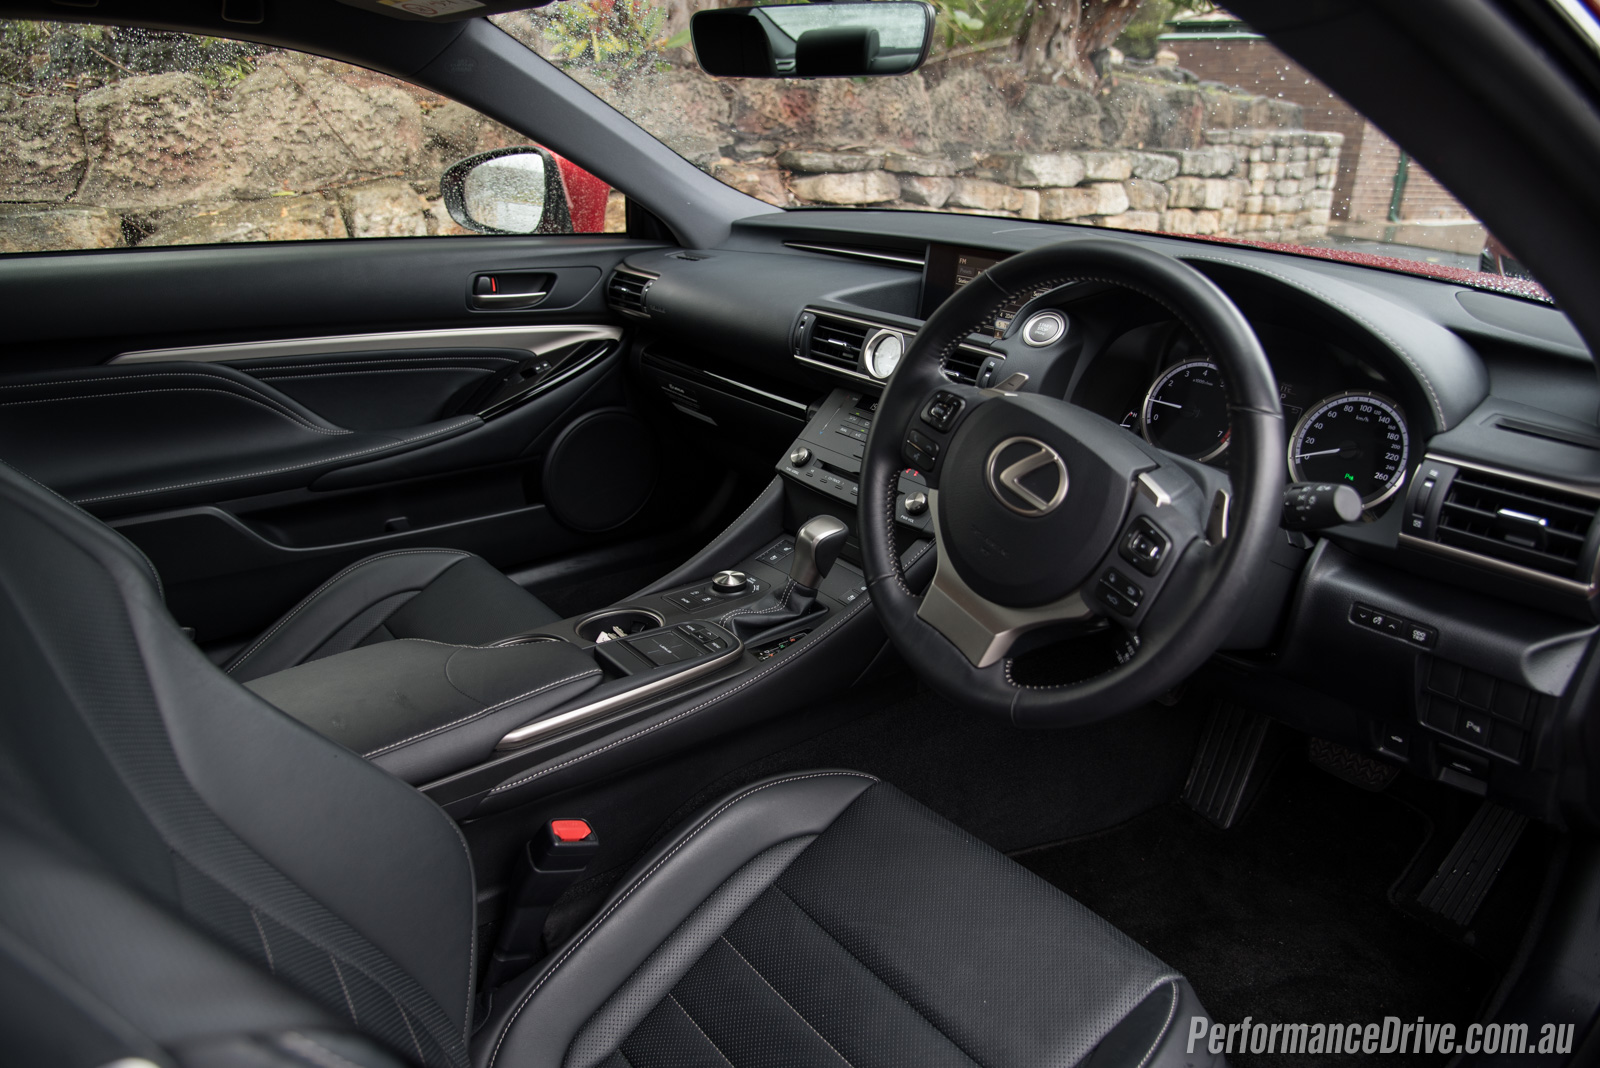 2016 Lexus Rc 200t Review Video Performancedrive